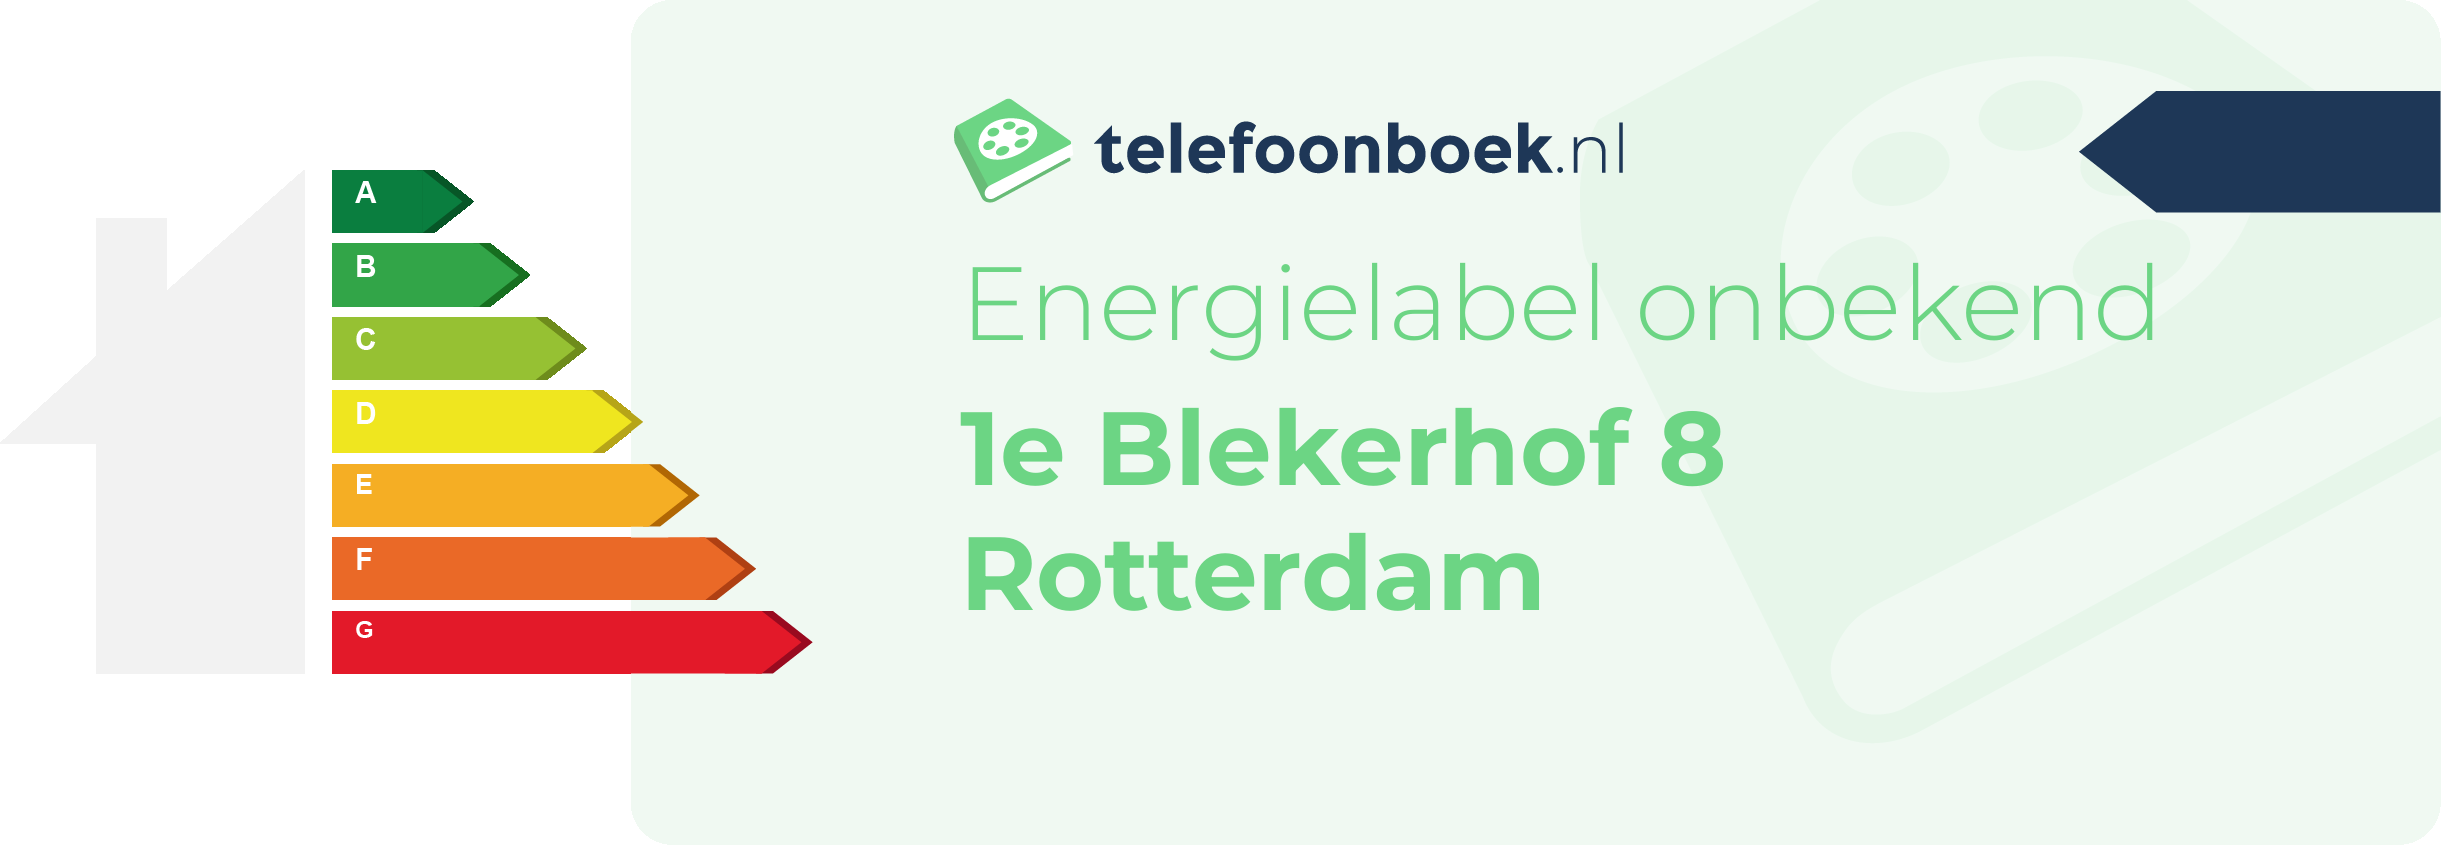 Energielabel 1e Blekerhof 8 Rotterdam